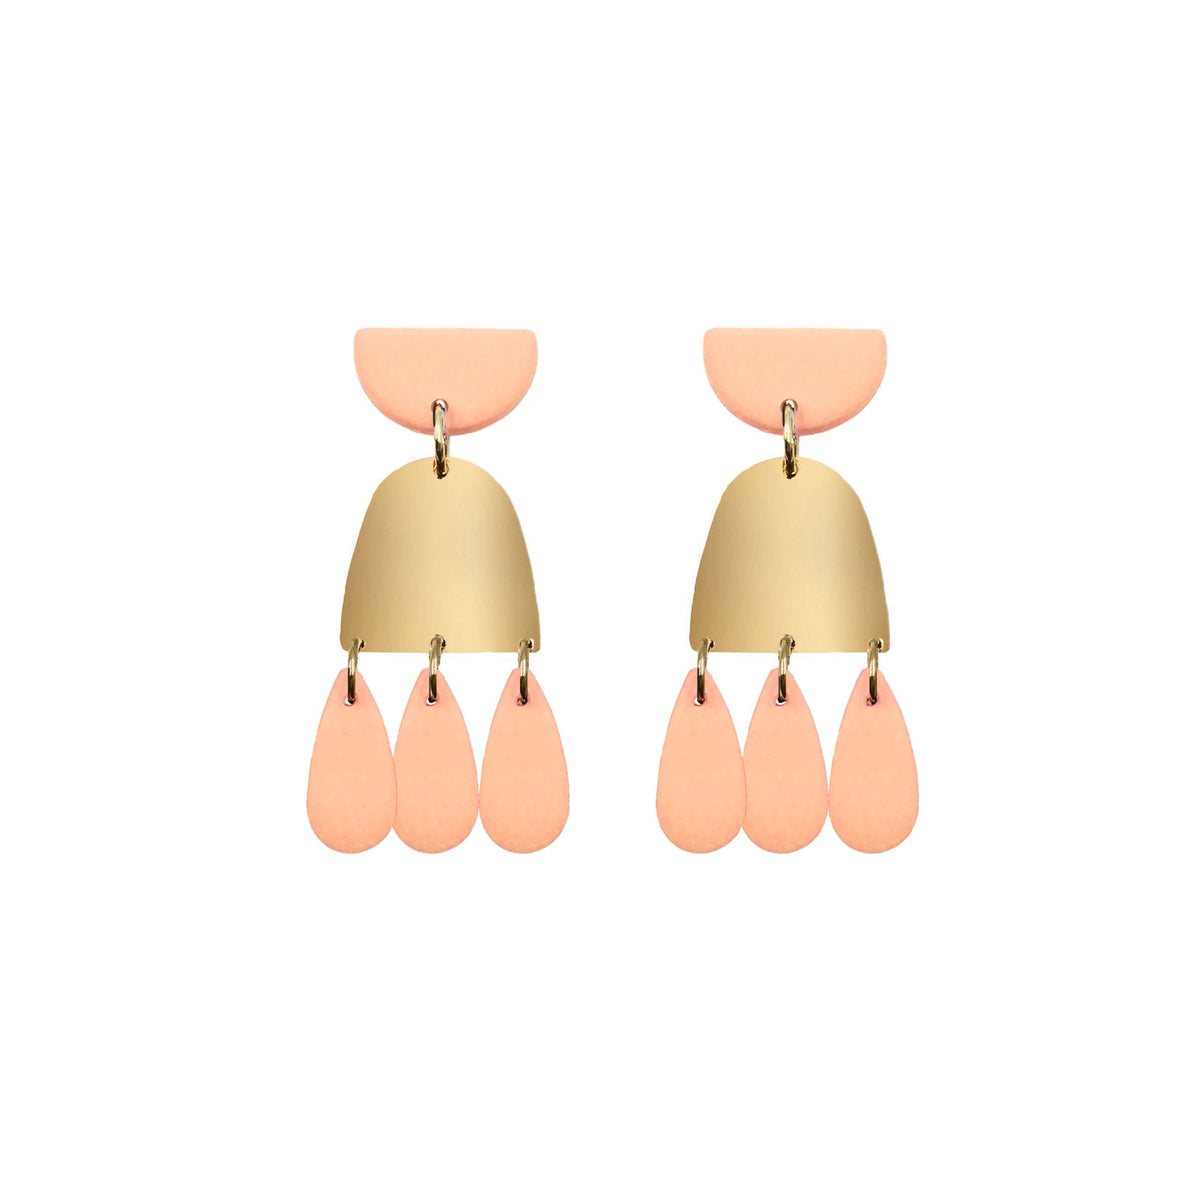 Doris Collection - Sherbet Earrings fine designer jewelry for men and women